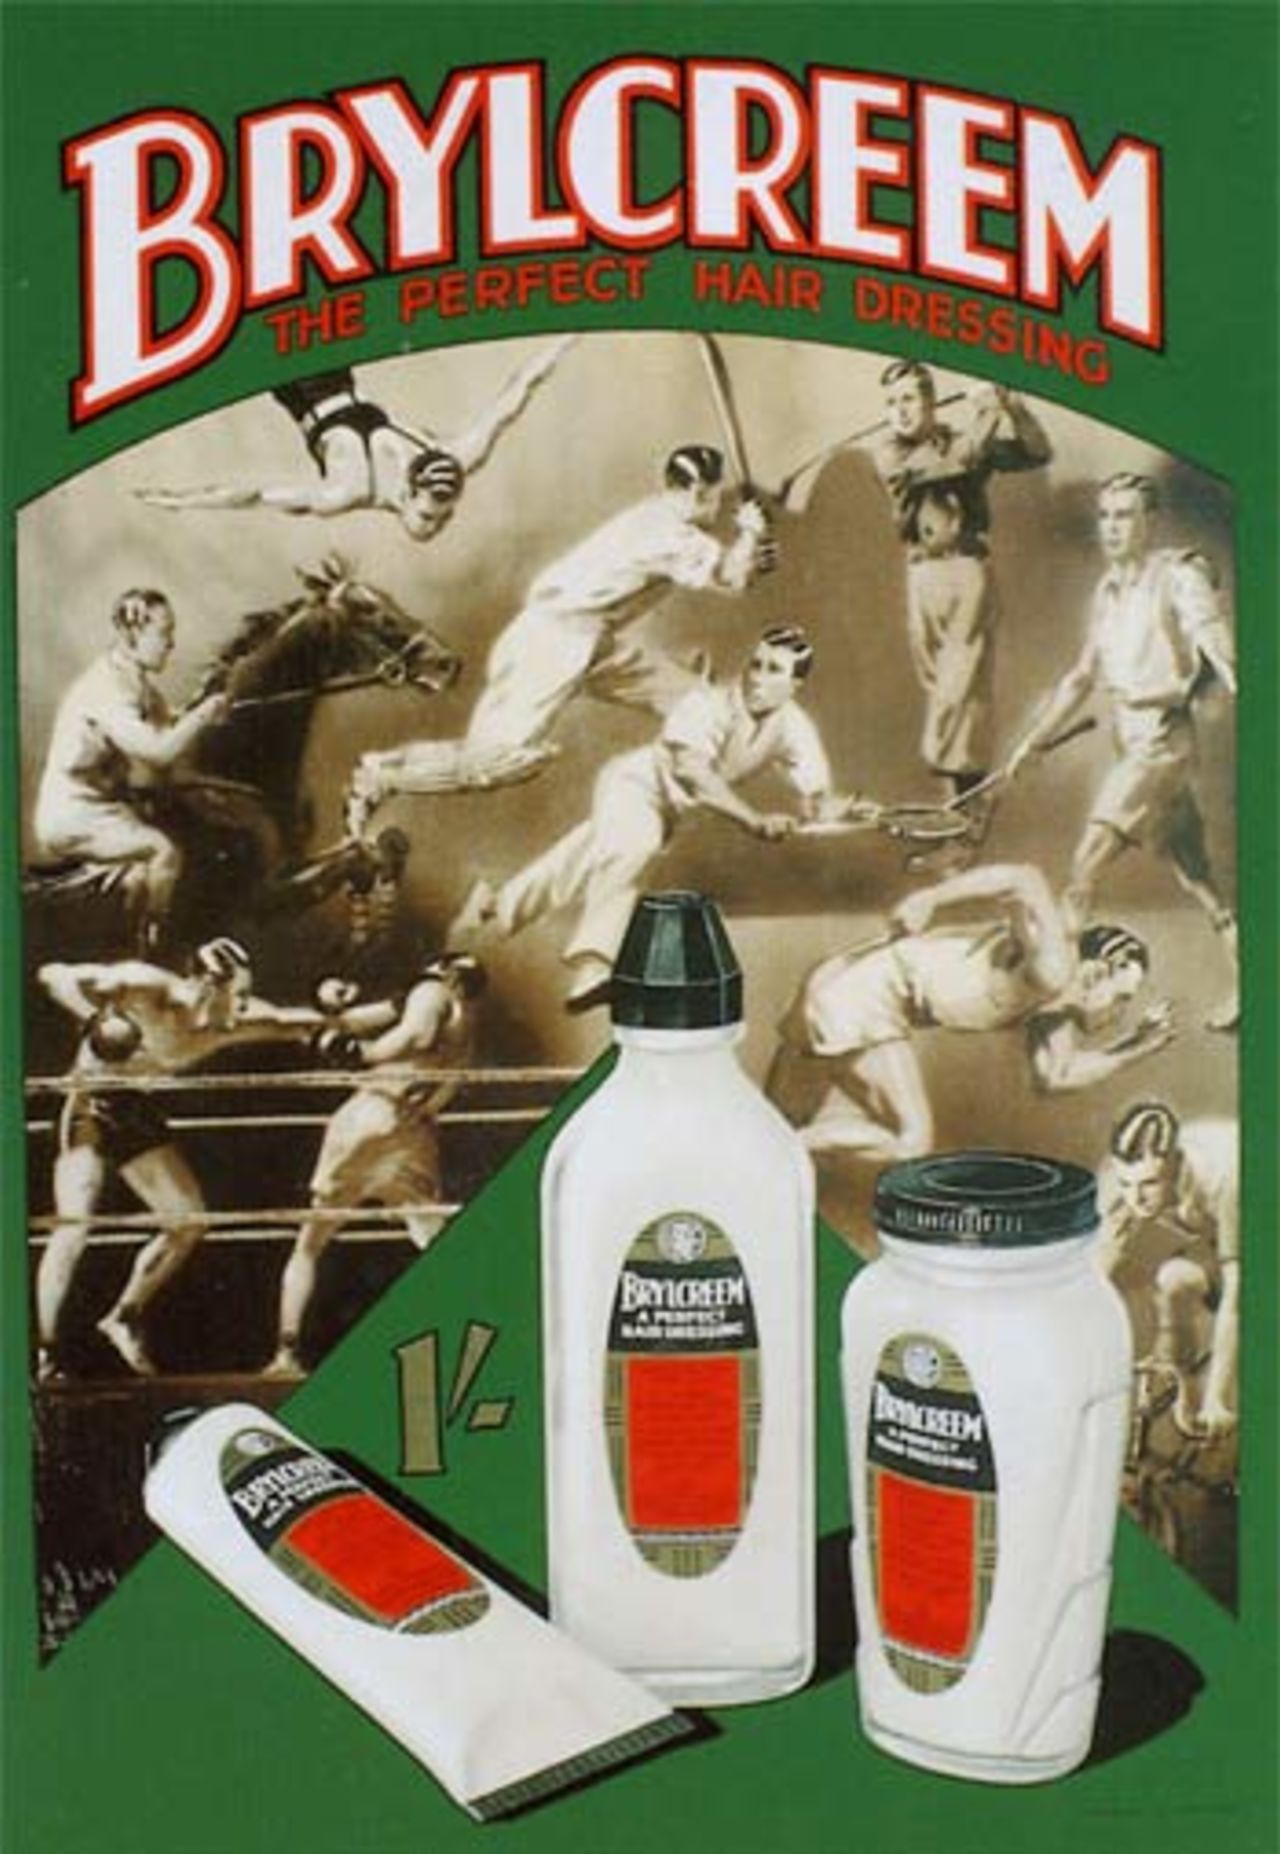 1930s Brylcreem advertisment featuring sportsmen